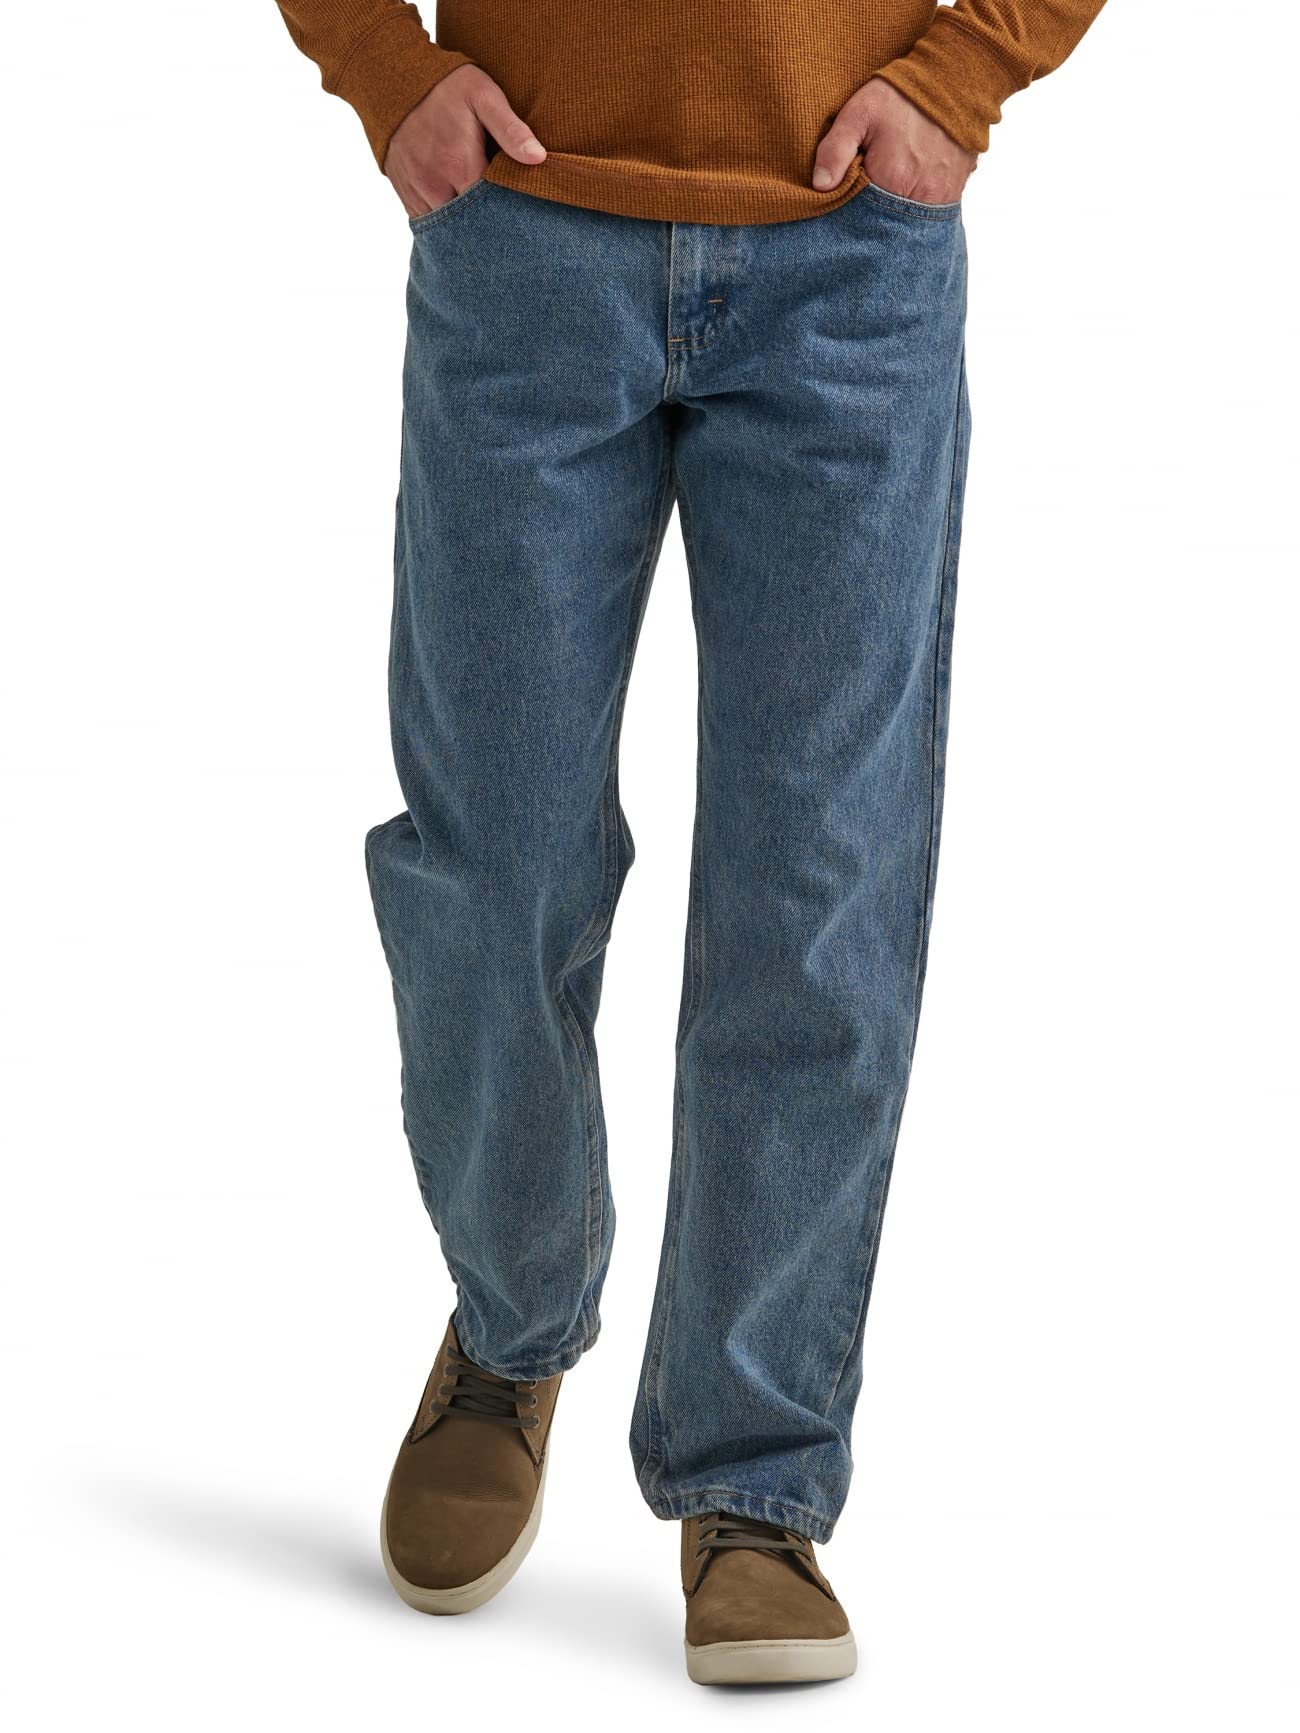 Wrangler Authentics Men's Classic 5-Pocket Relaxed Fit Cotton Jean, Stonewash, 38W X 34L